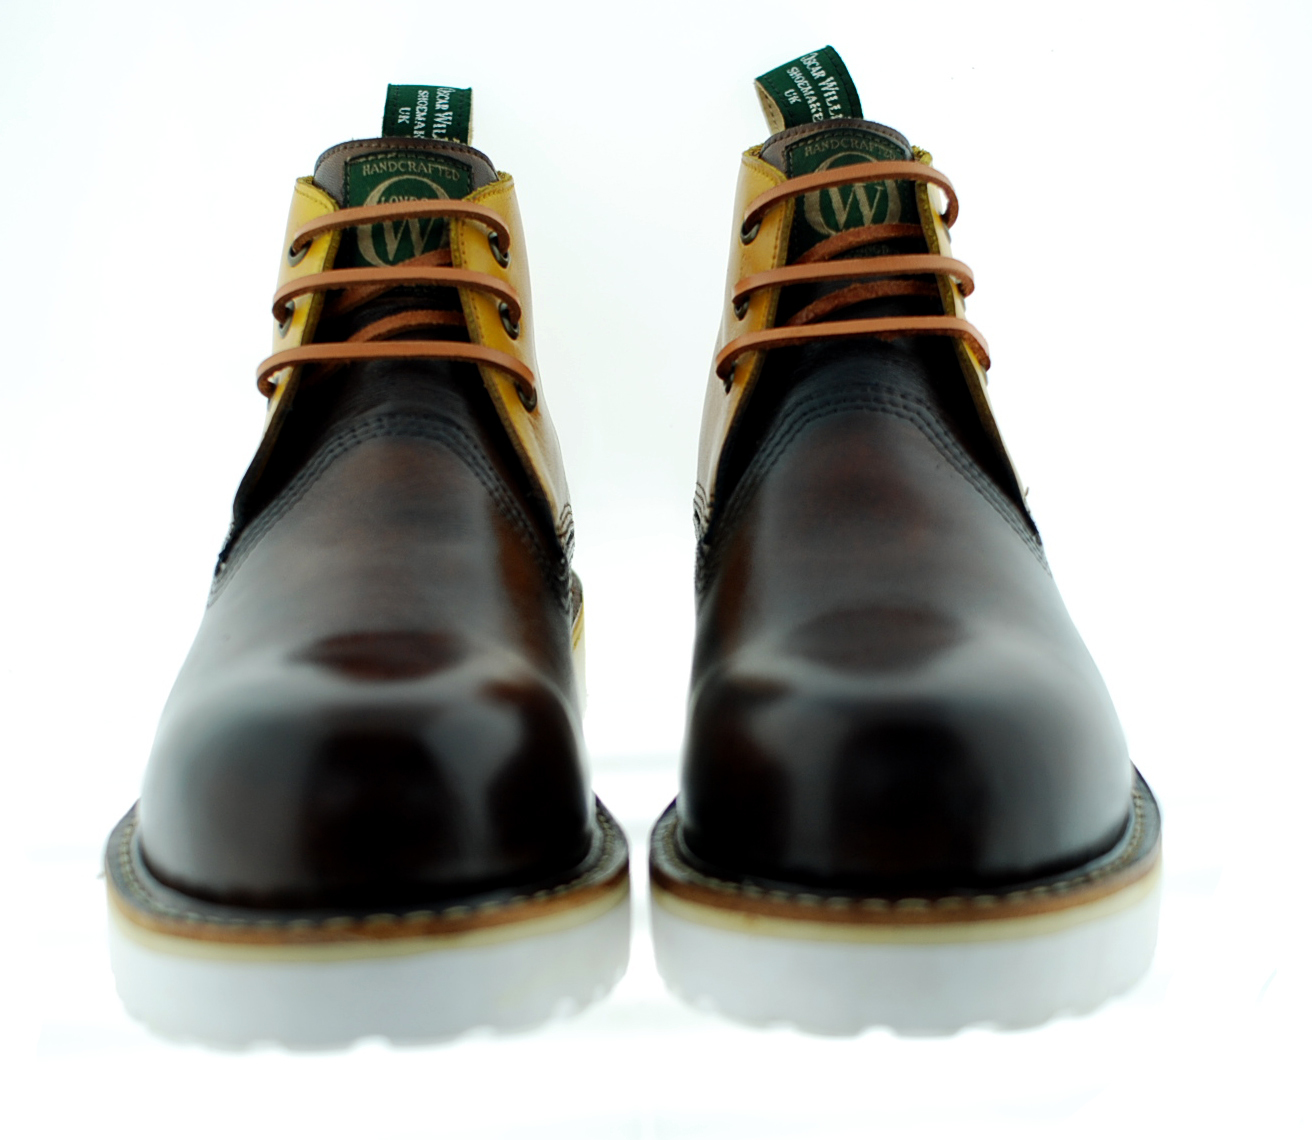 Moc Toe Handmade Boots (Camden Town) ID 7091